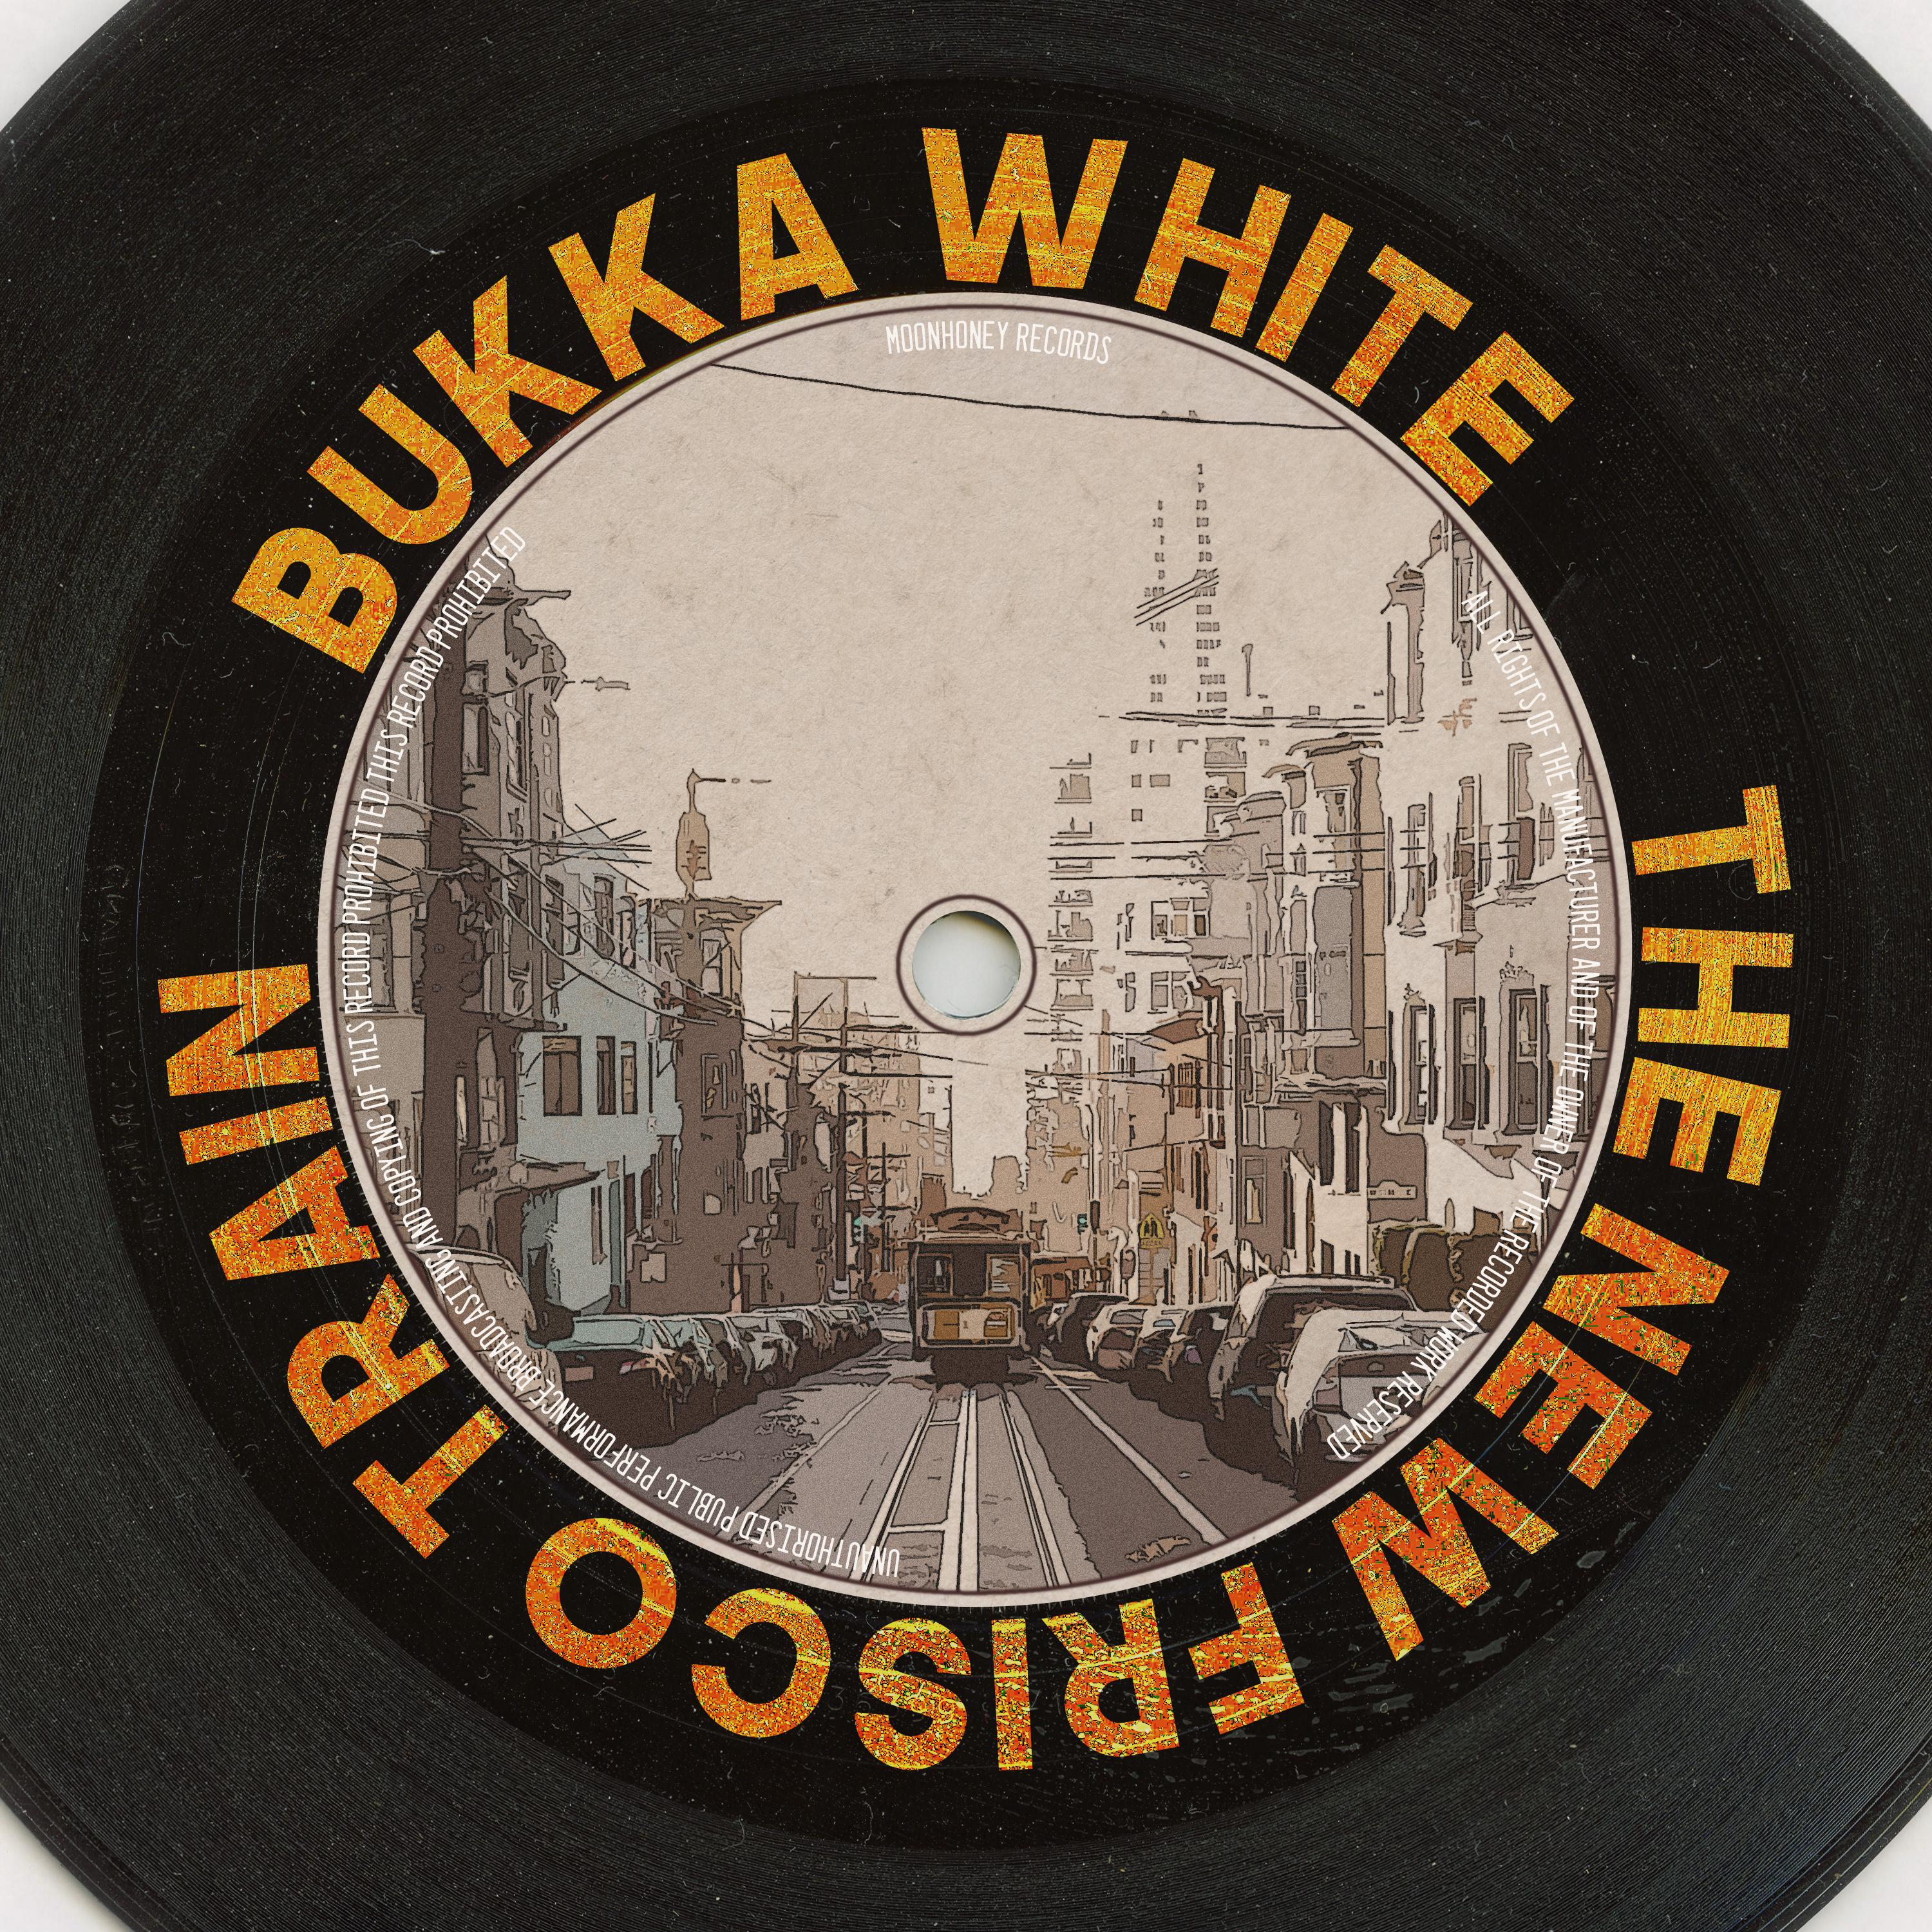 Bukka White - I'm the Heavenly Way (Remastered 2014)